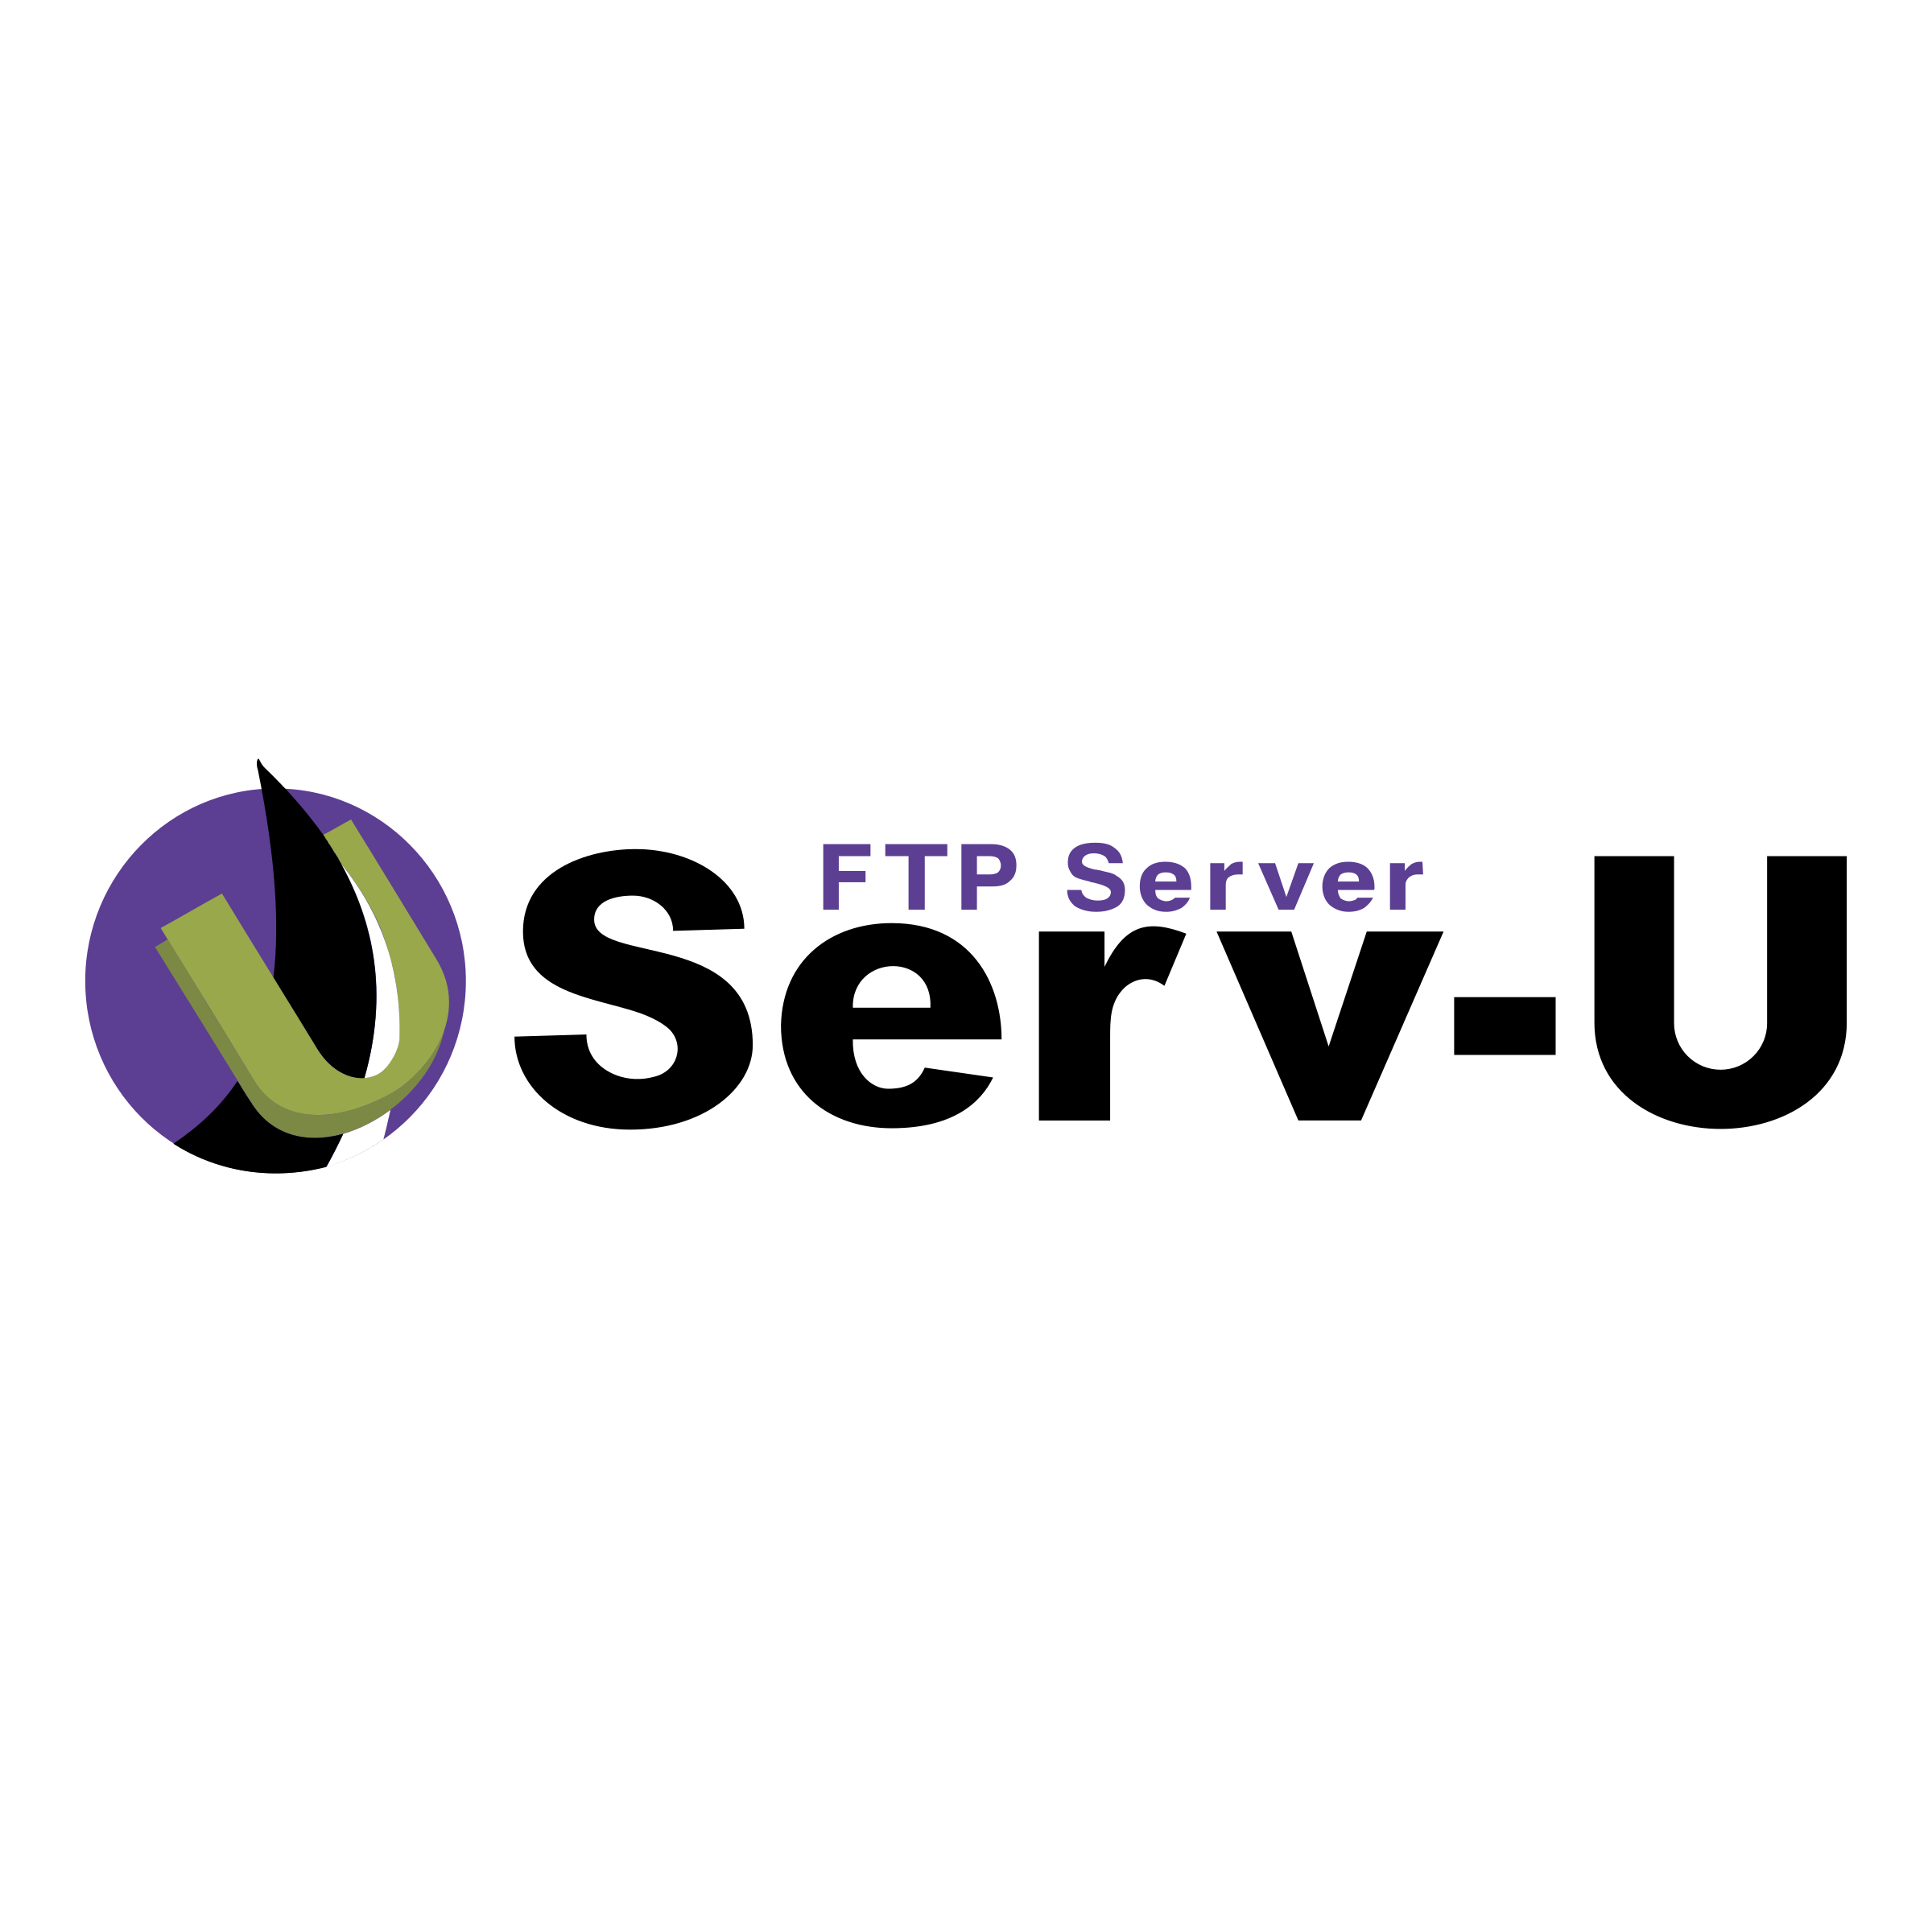 FTP Logo - Serv U FTP Server Logo PNG Transparent & SVG Vector - Freebie Supply